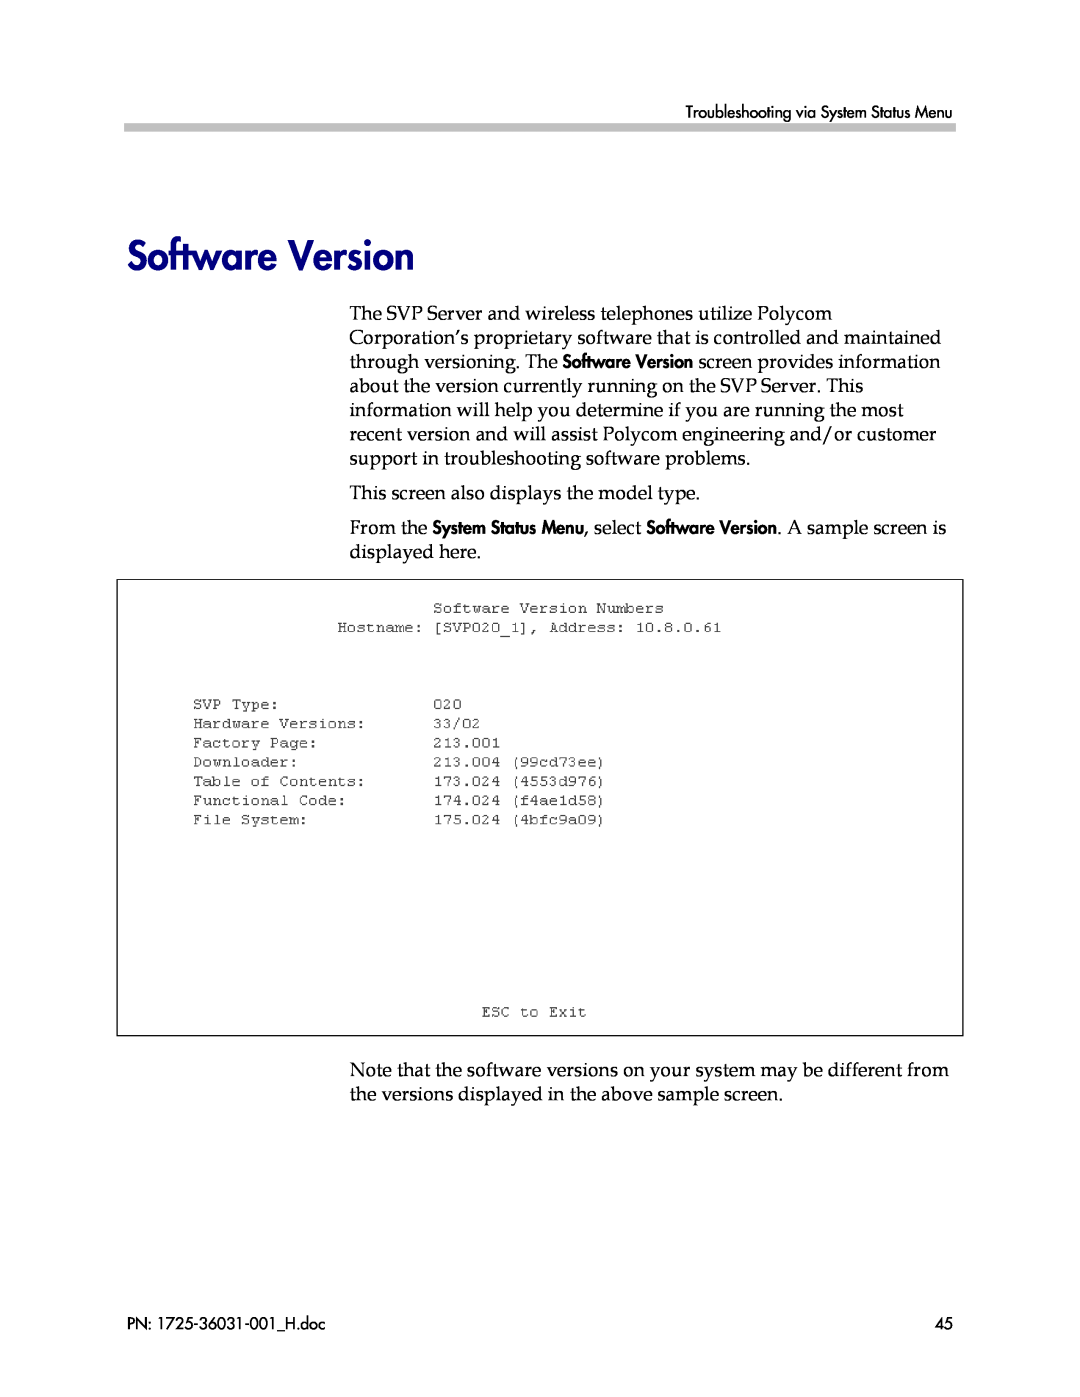 Polycom 1725-36031-001, VP010 manual Software Version 